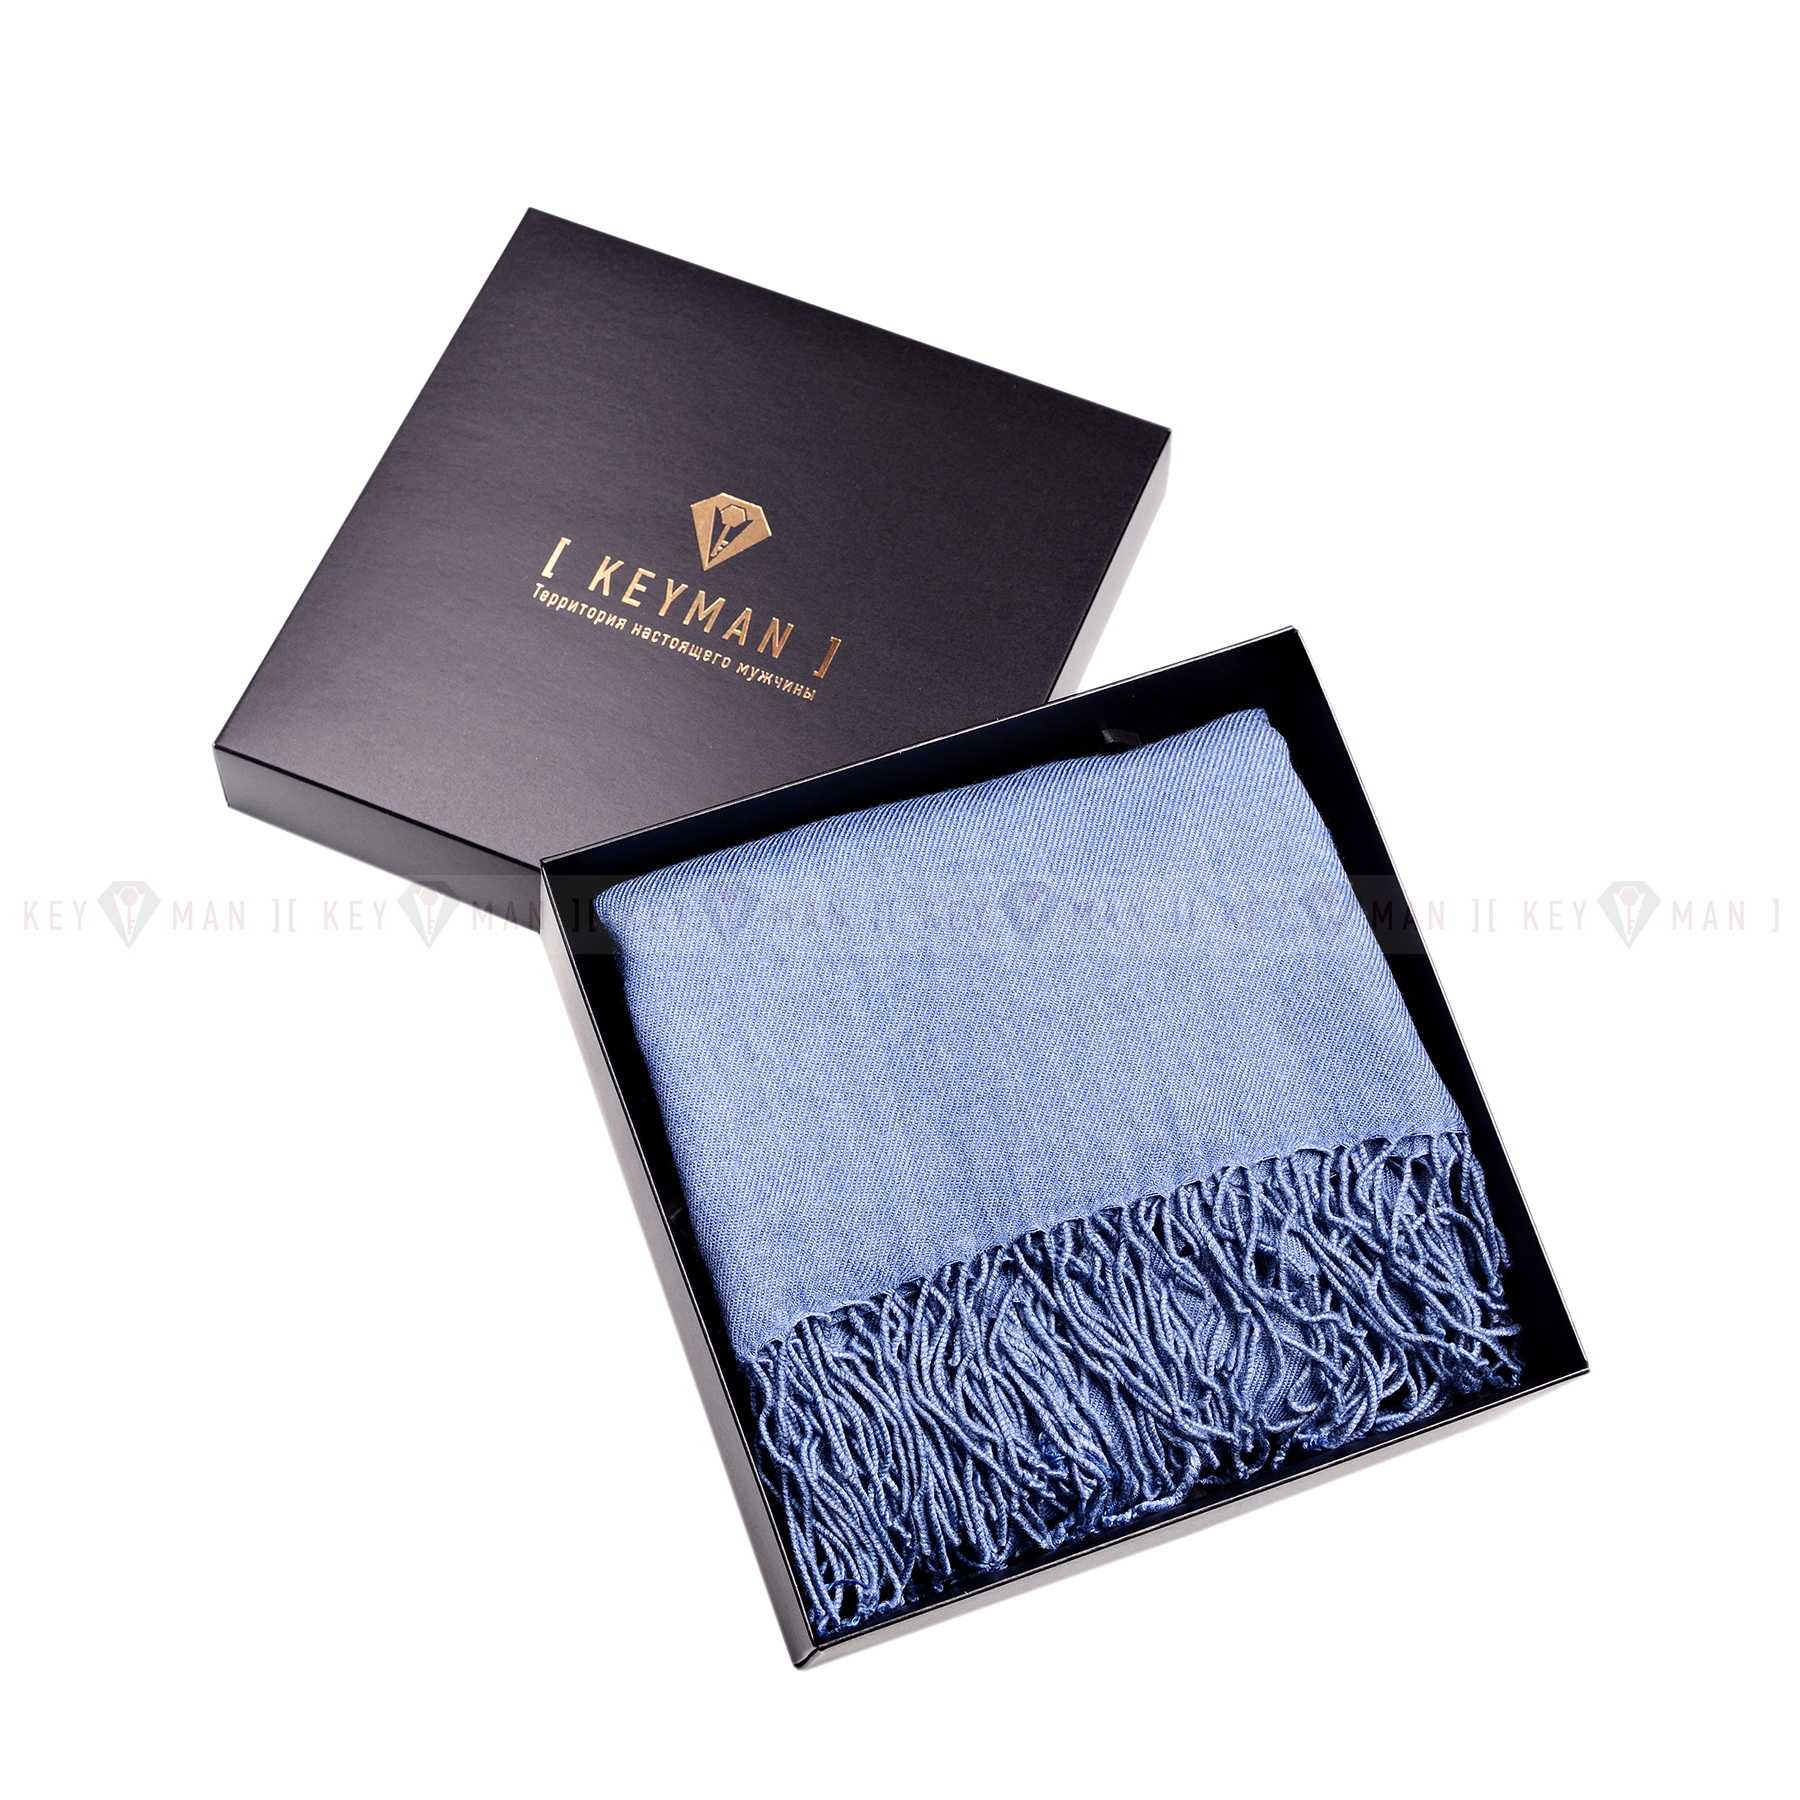 Пример подарочного набора Keyman (фирменная коробочка, шарф голубого цвета)